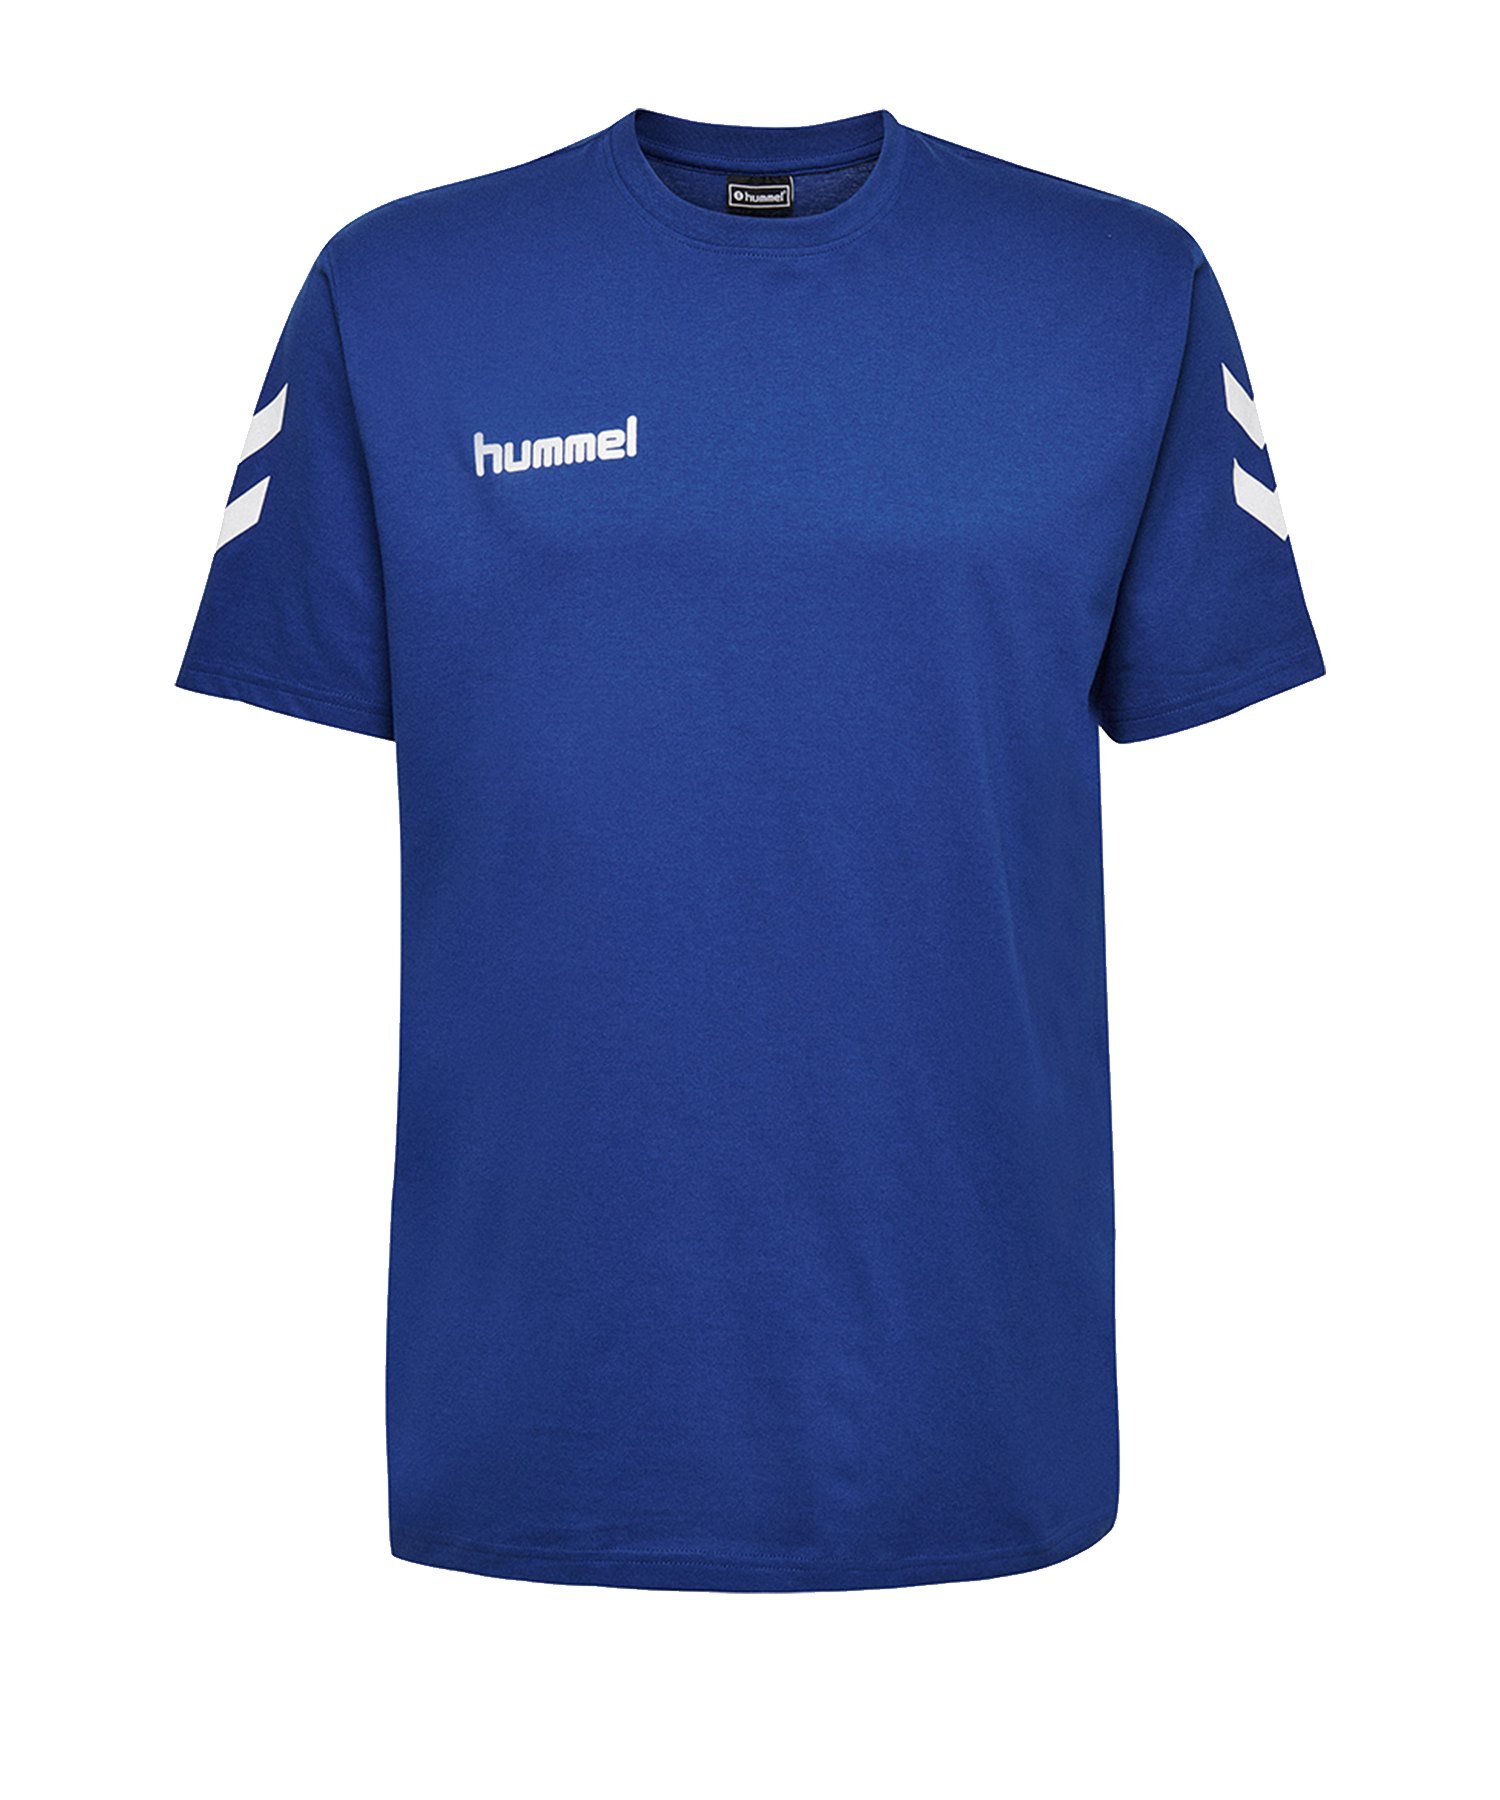 Hummel Cotton T-Shirt Kids Blau F7045 - Blau